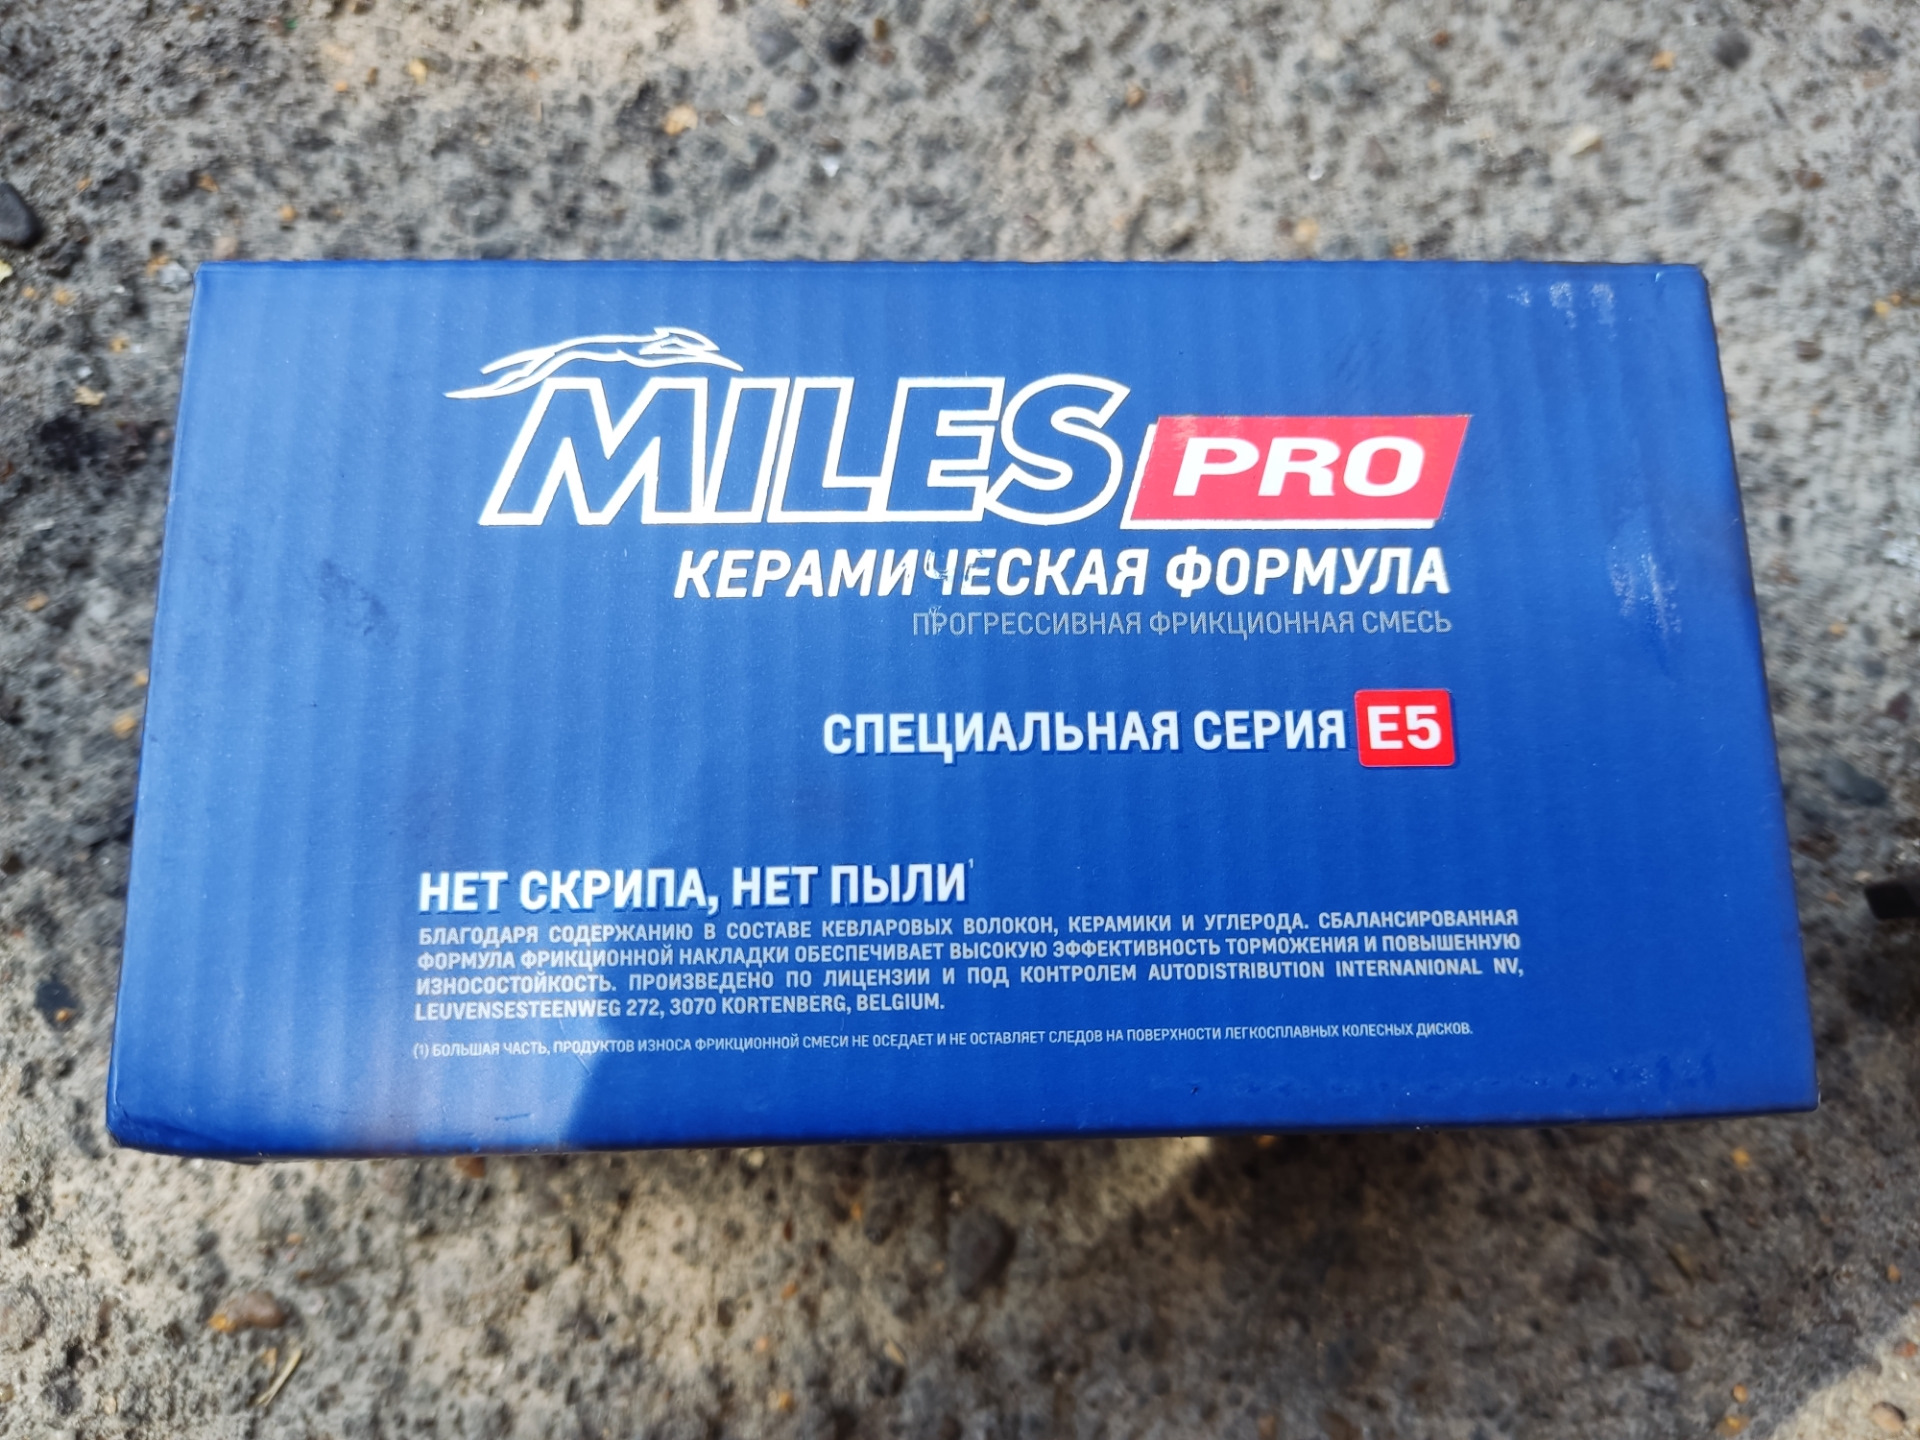 Miles pro. Колодки тормозные Miles Pro Ceramic. Pro Miles синие. Miles Pro Ceramic Formula на Ауди а6.